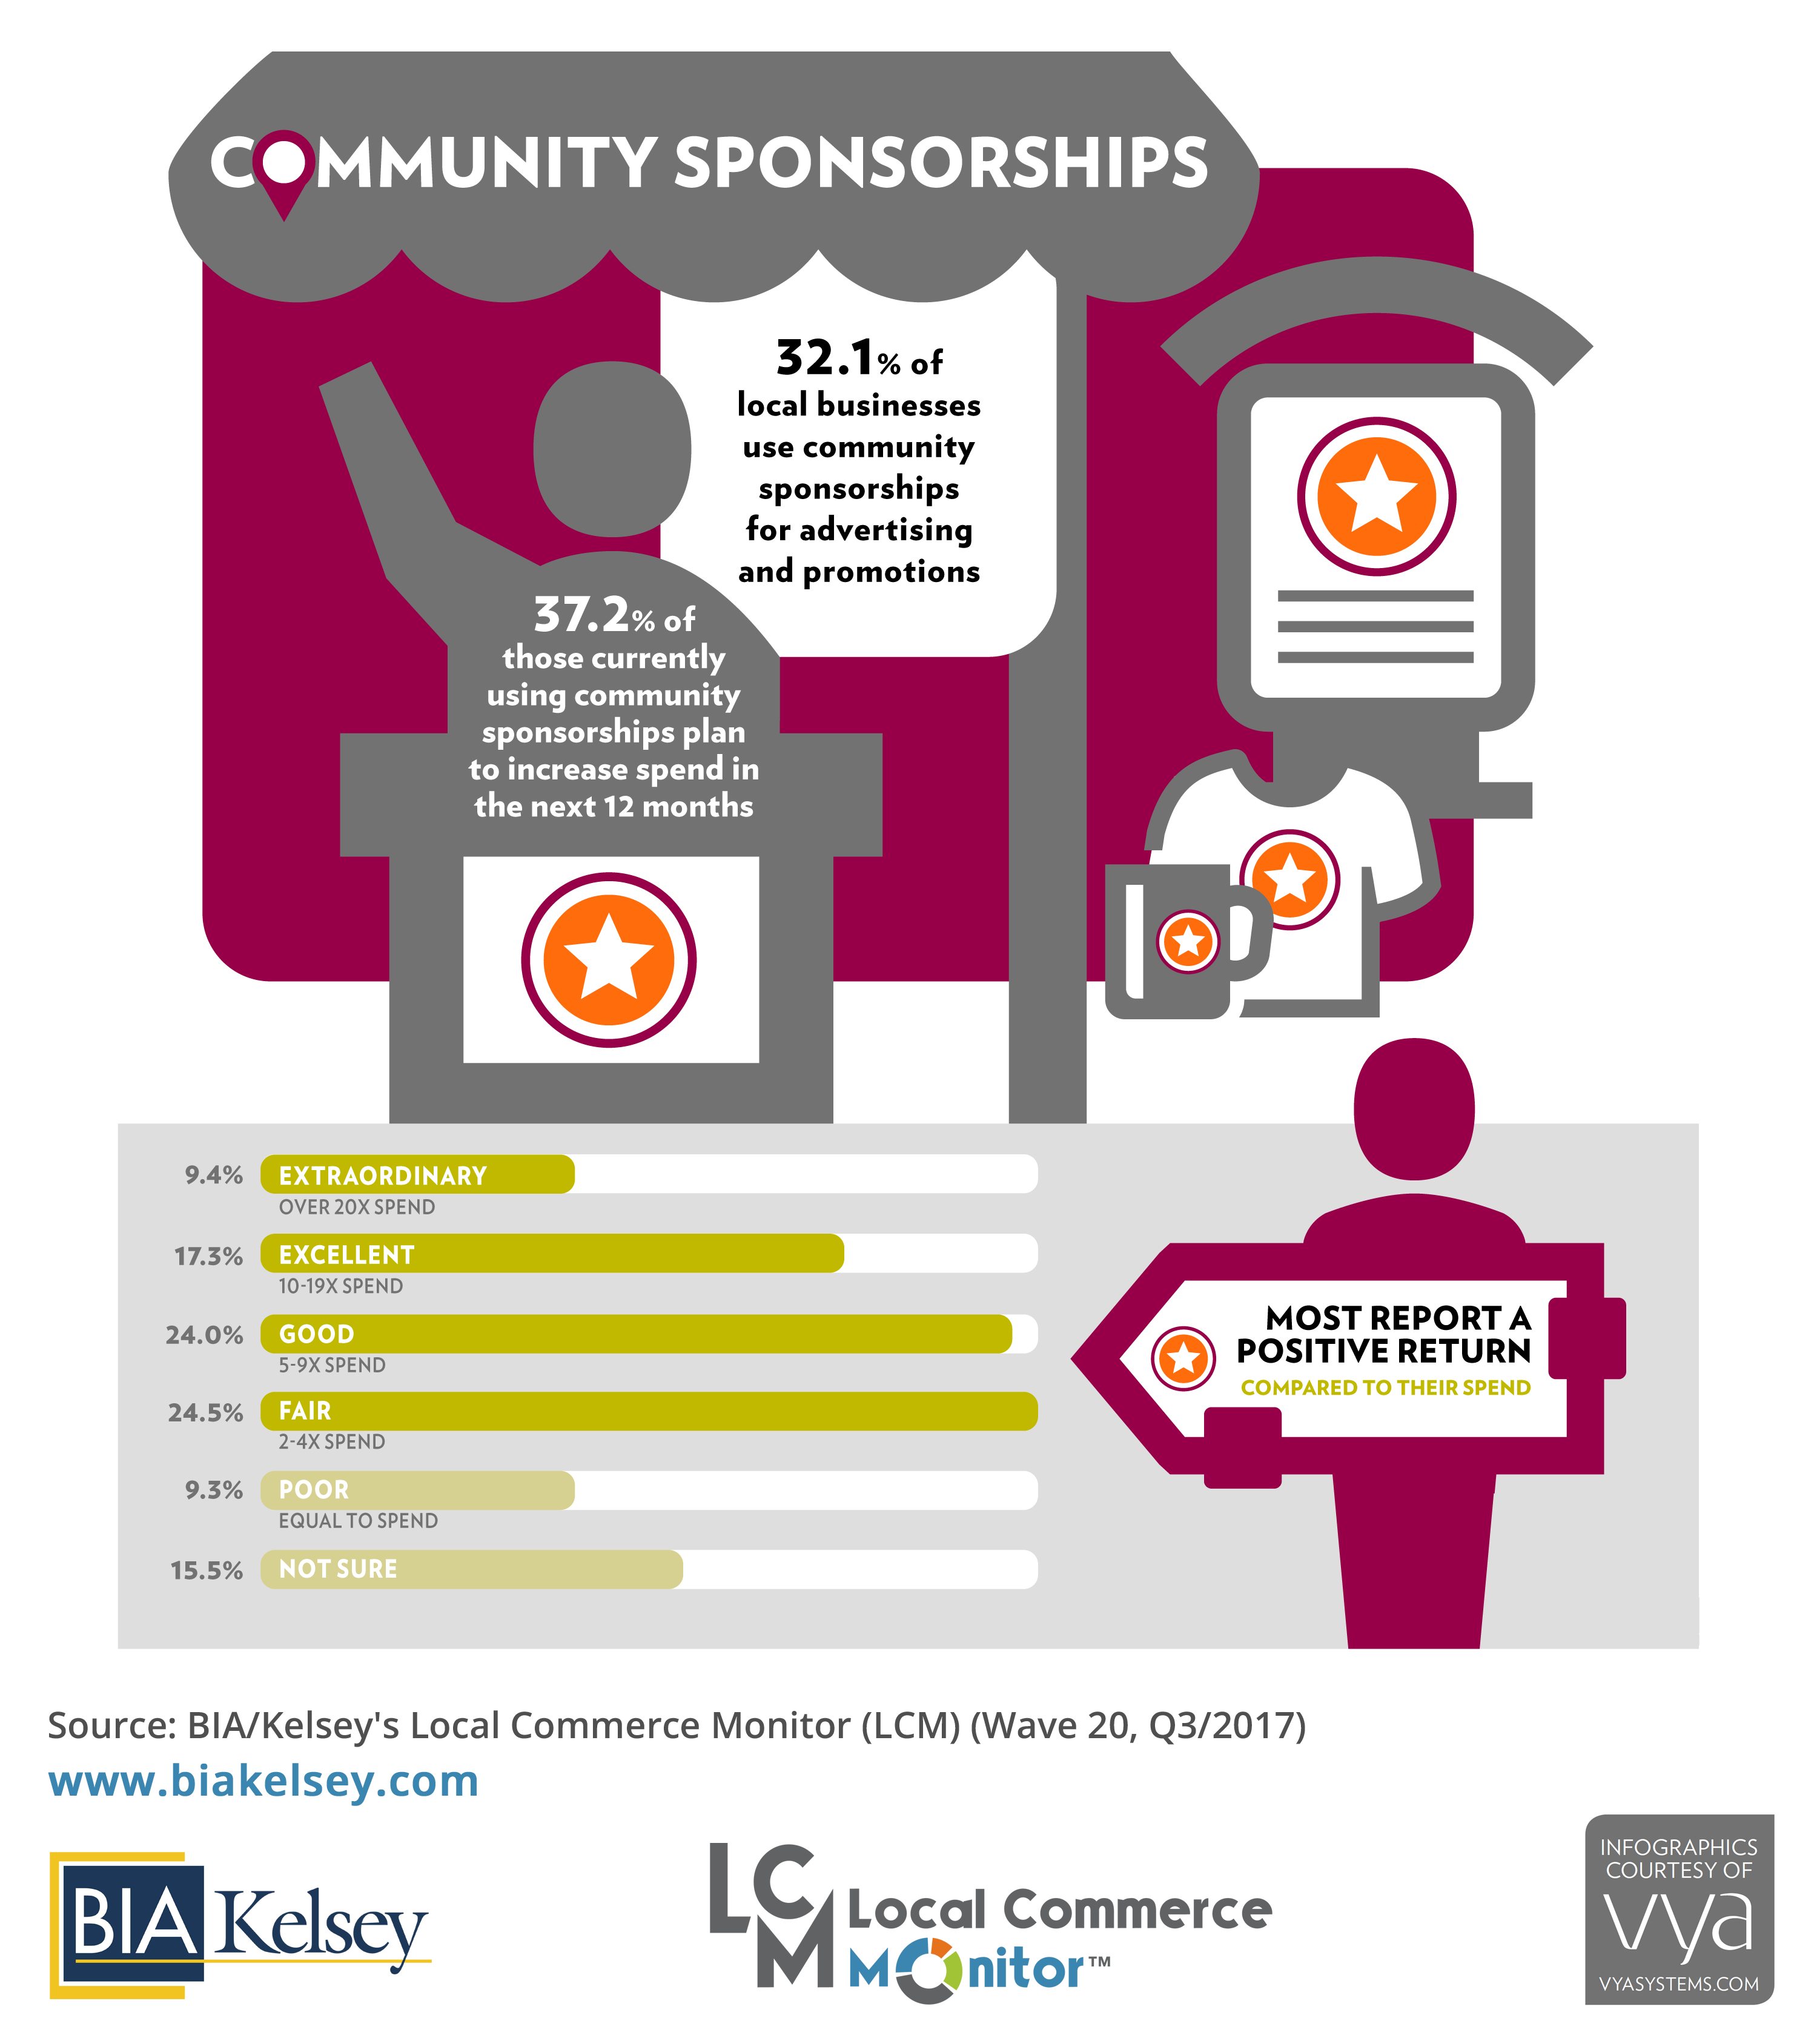 Community Sponsorships Infographic (LCM 20)